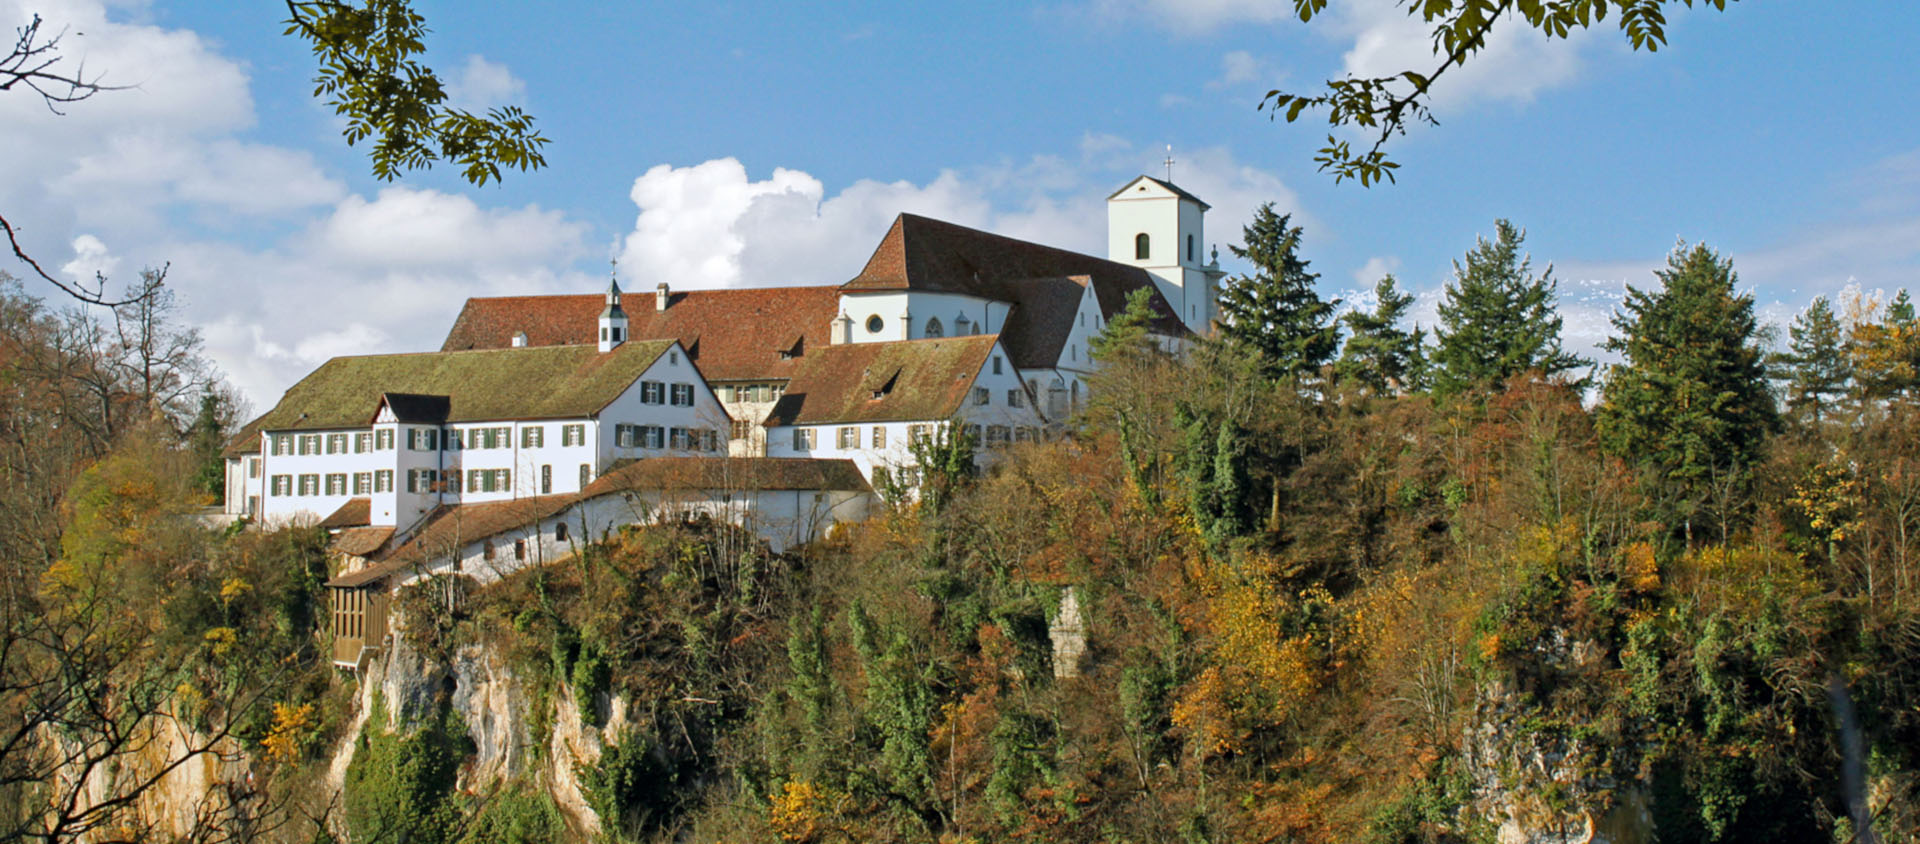 L'abbaye de Mariastein (SO) a été récupérée par les bénédictins en 1971 | © Kloster Mariastein